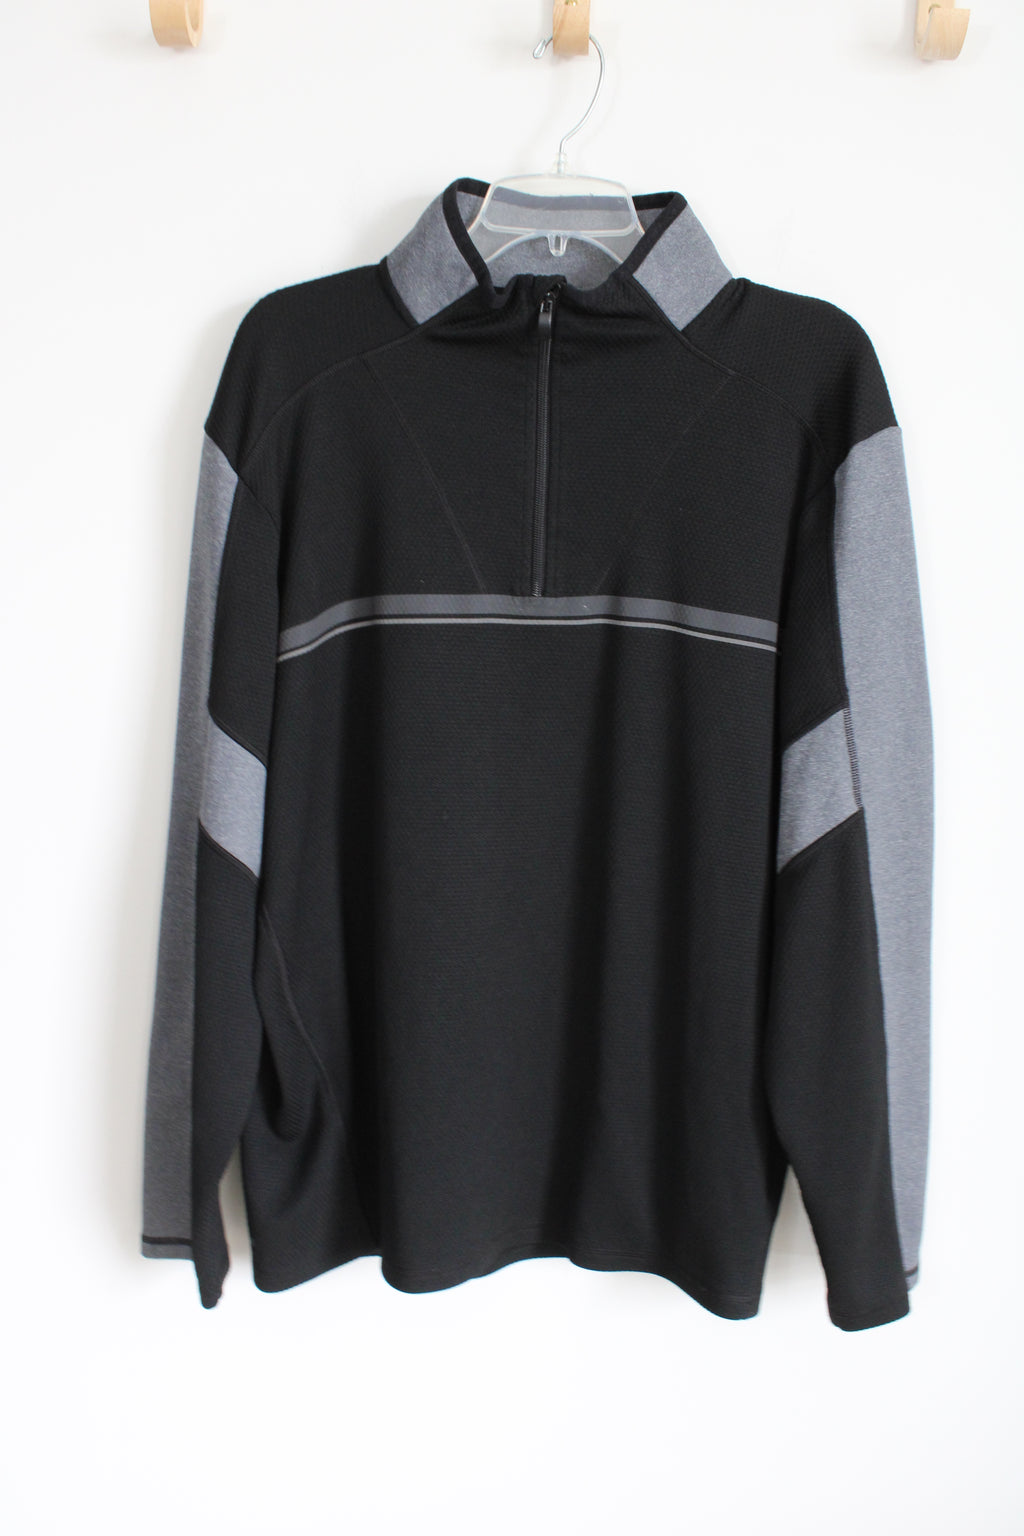 Calvin Klein Performance Black Gray 1/4 Pullover Sweatshirt | L